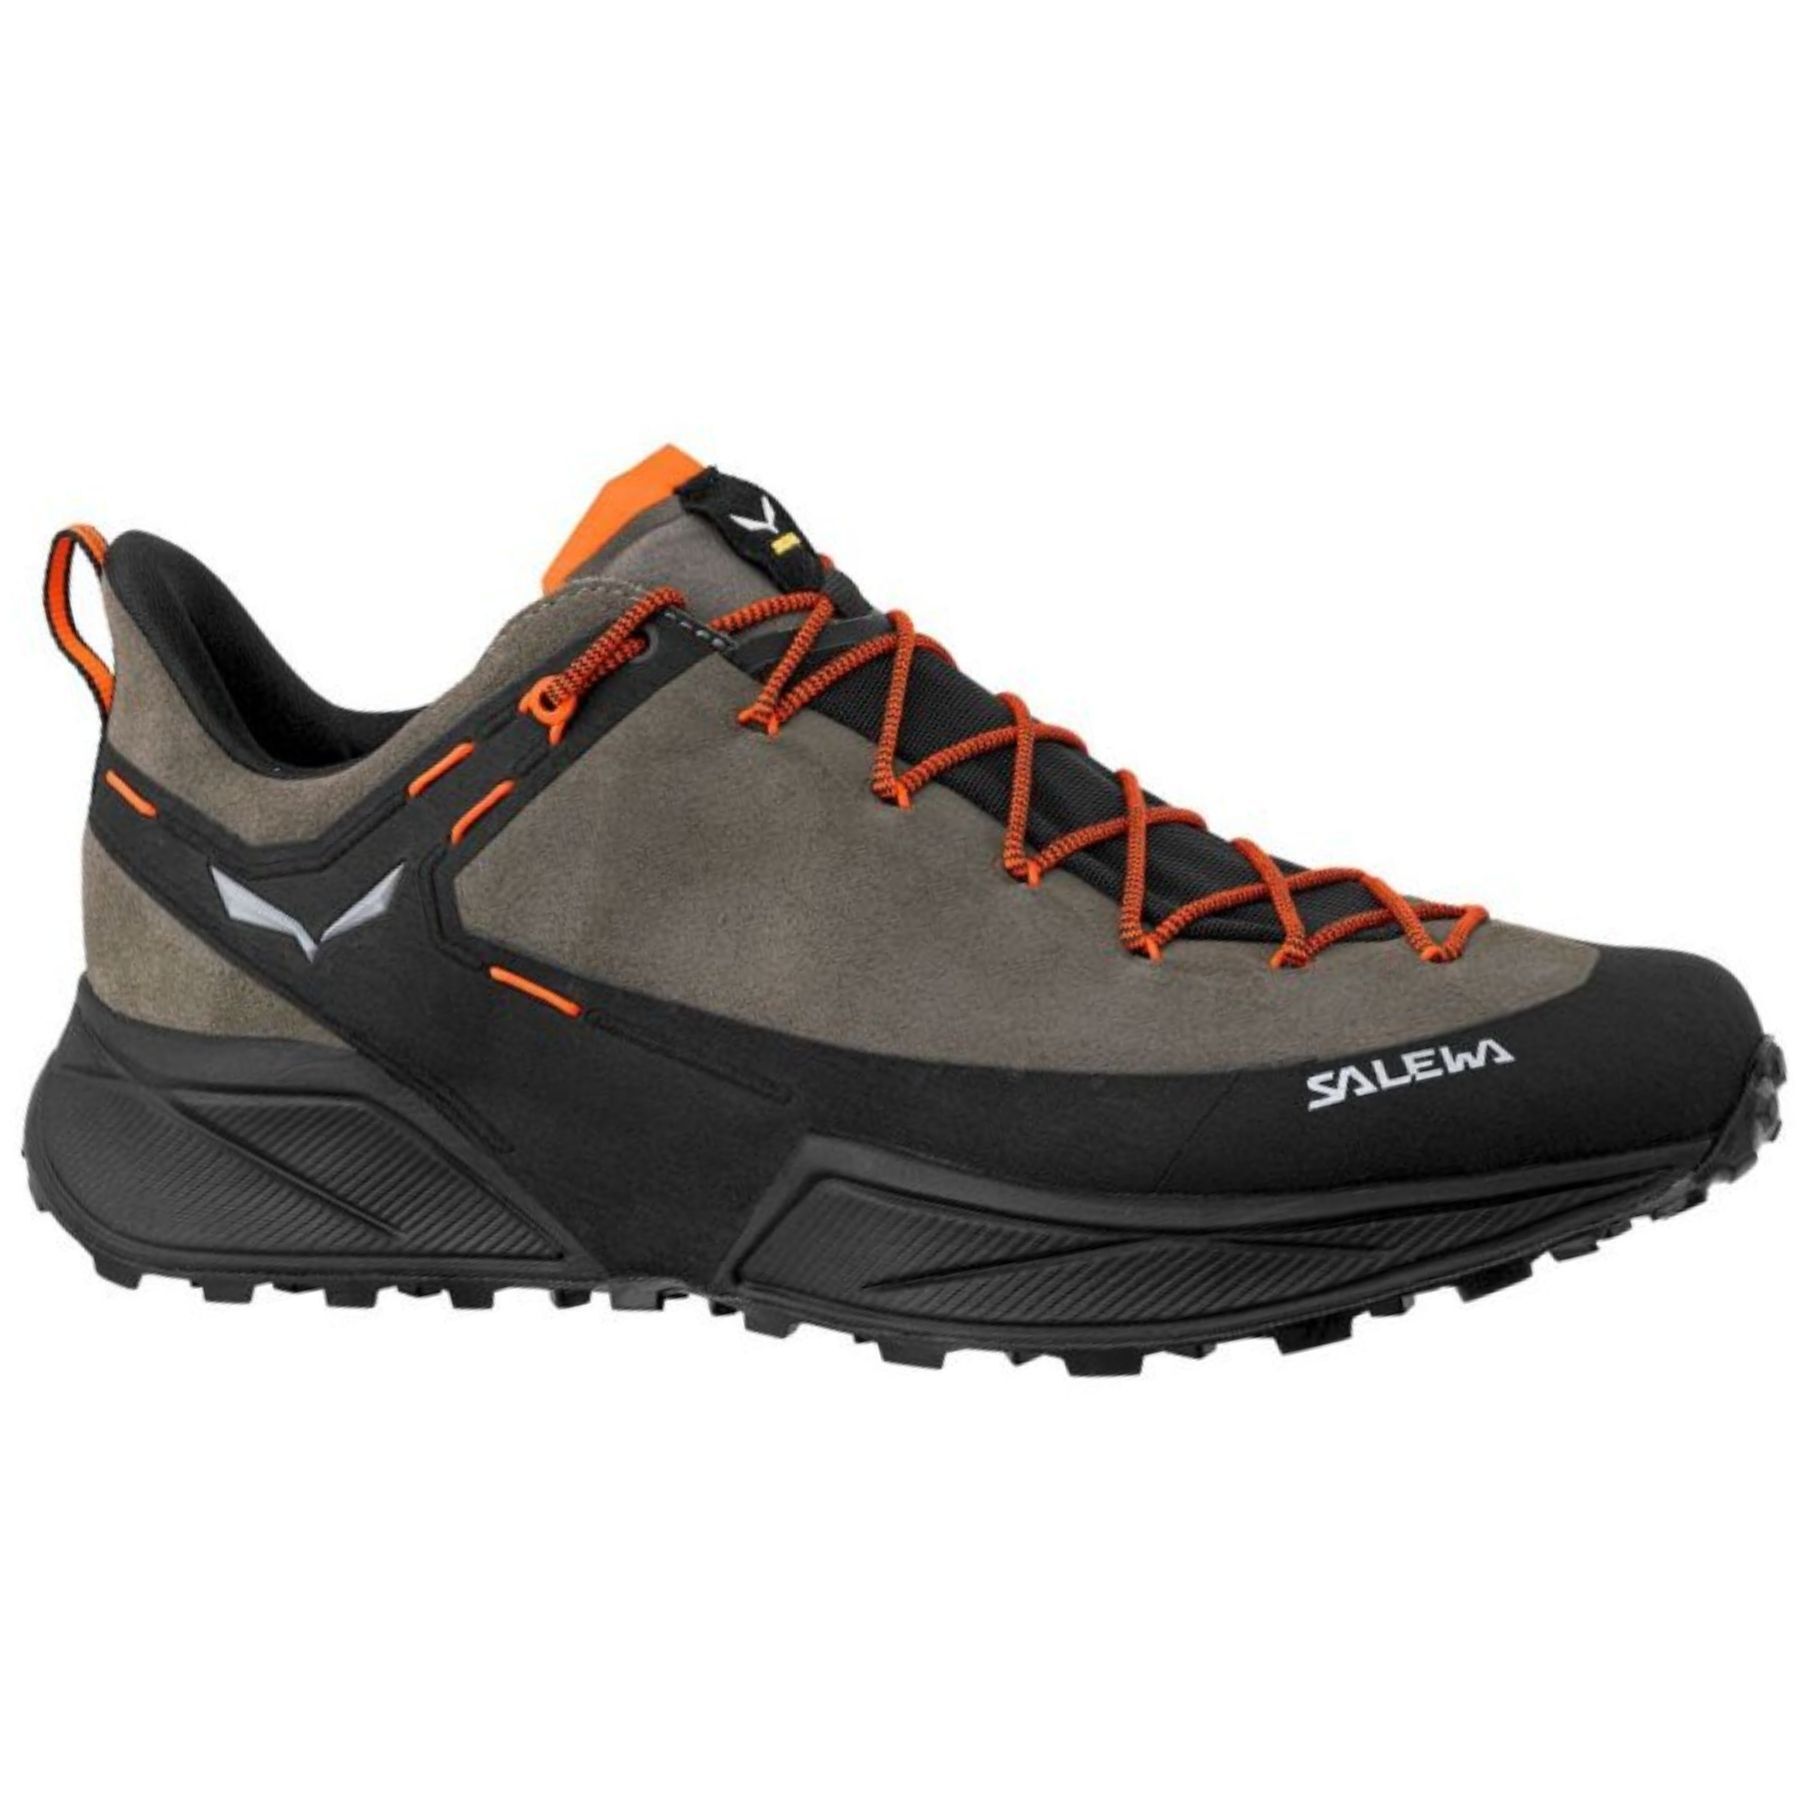 Salewa Dropline Leather - Walking shoes - Men's